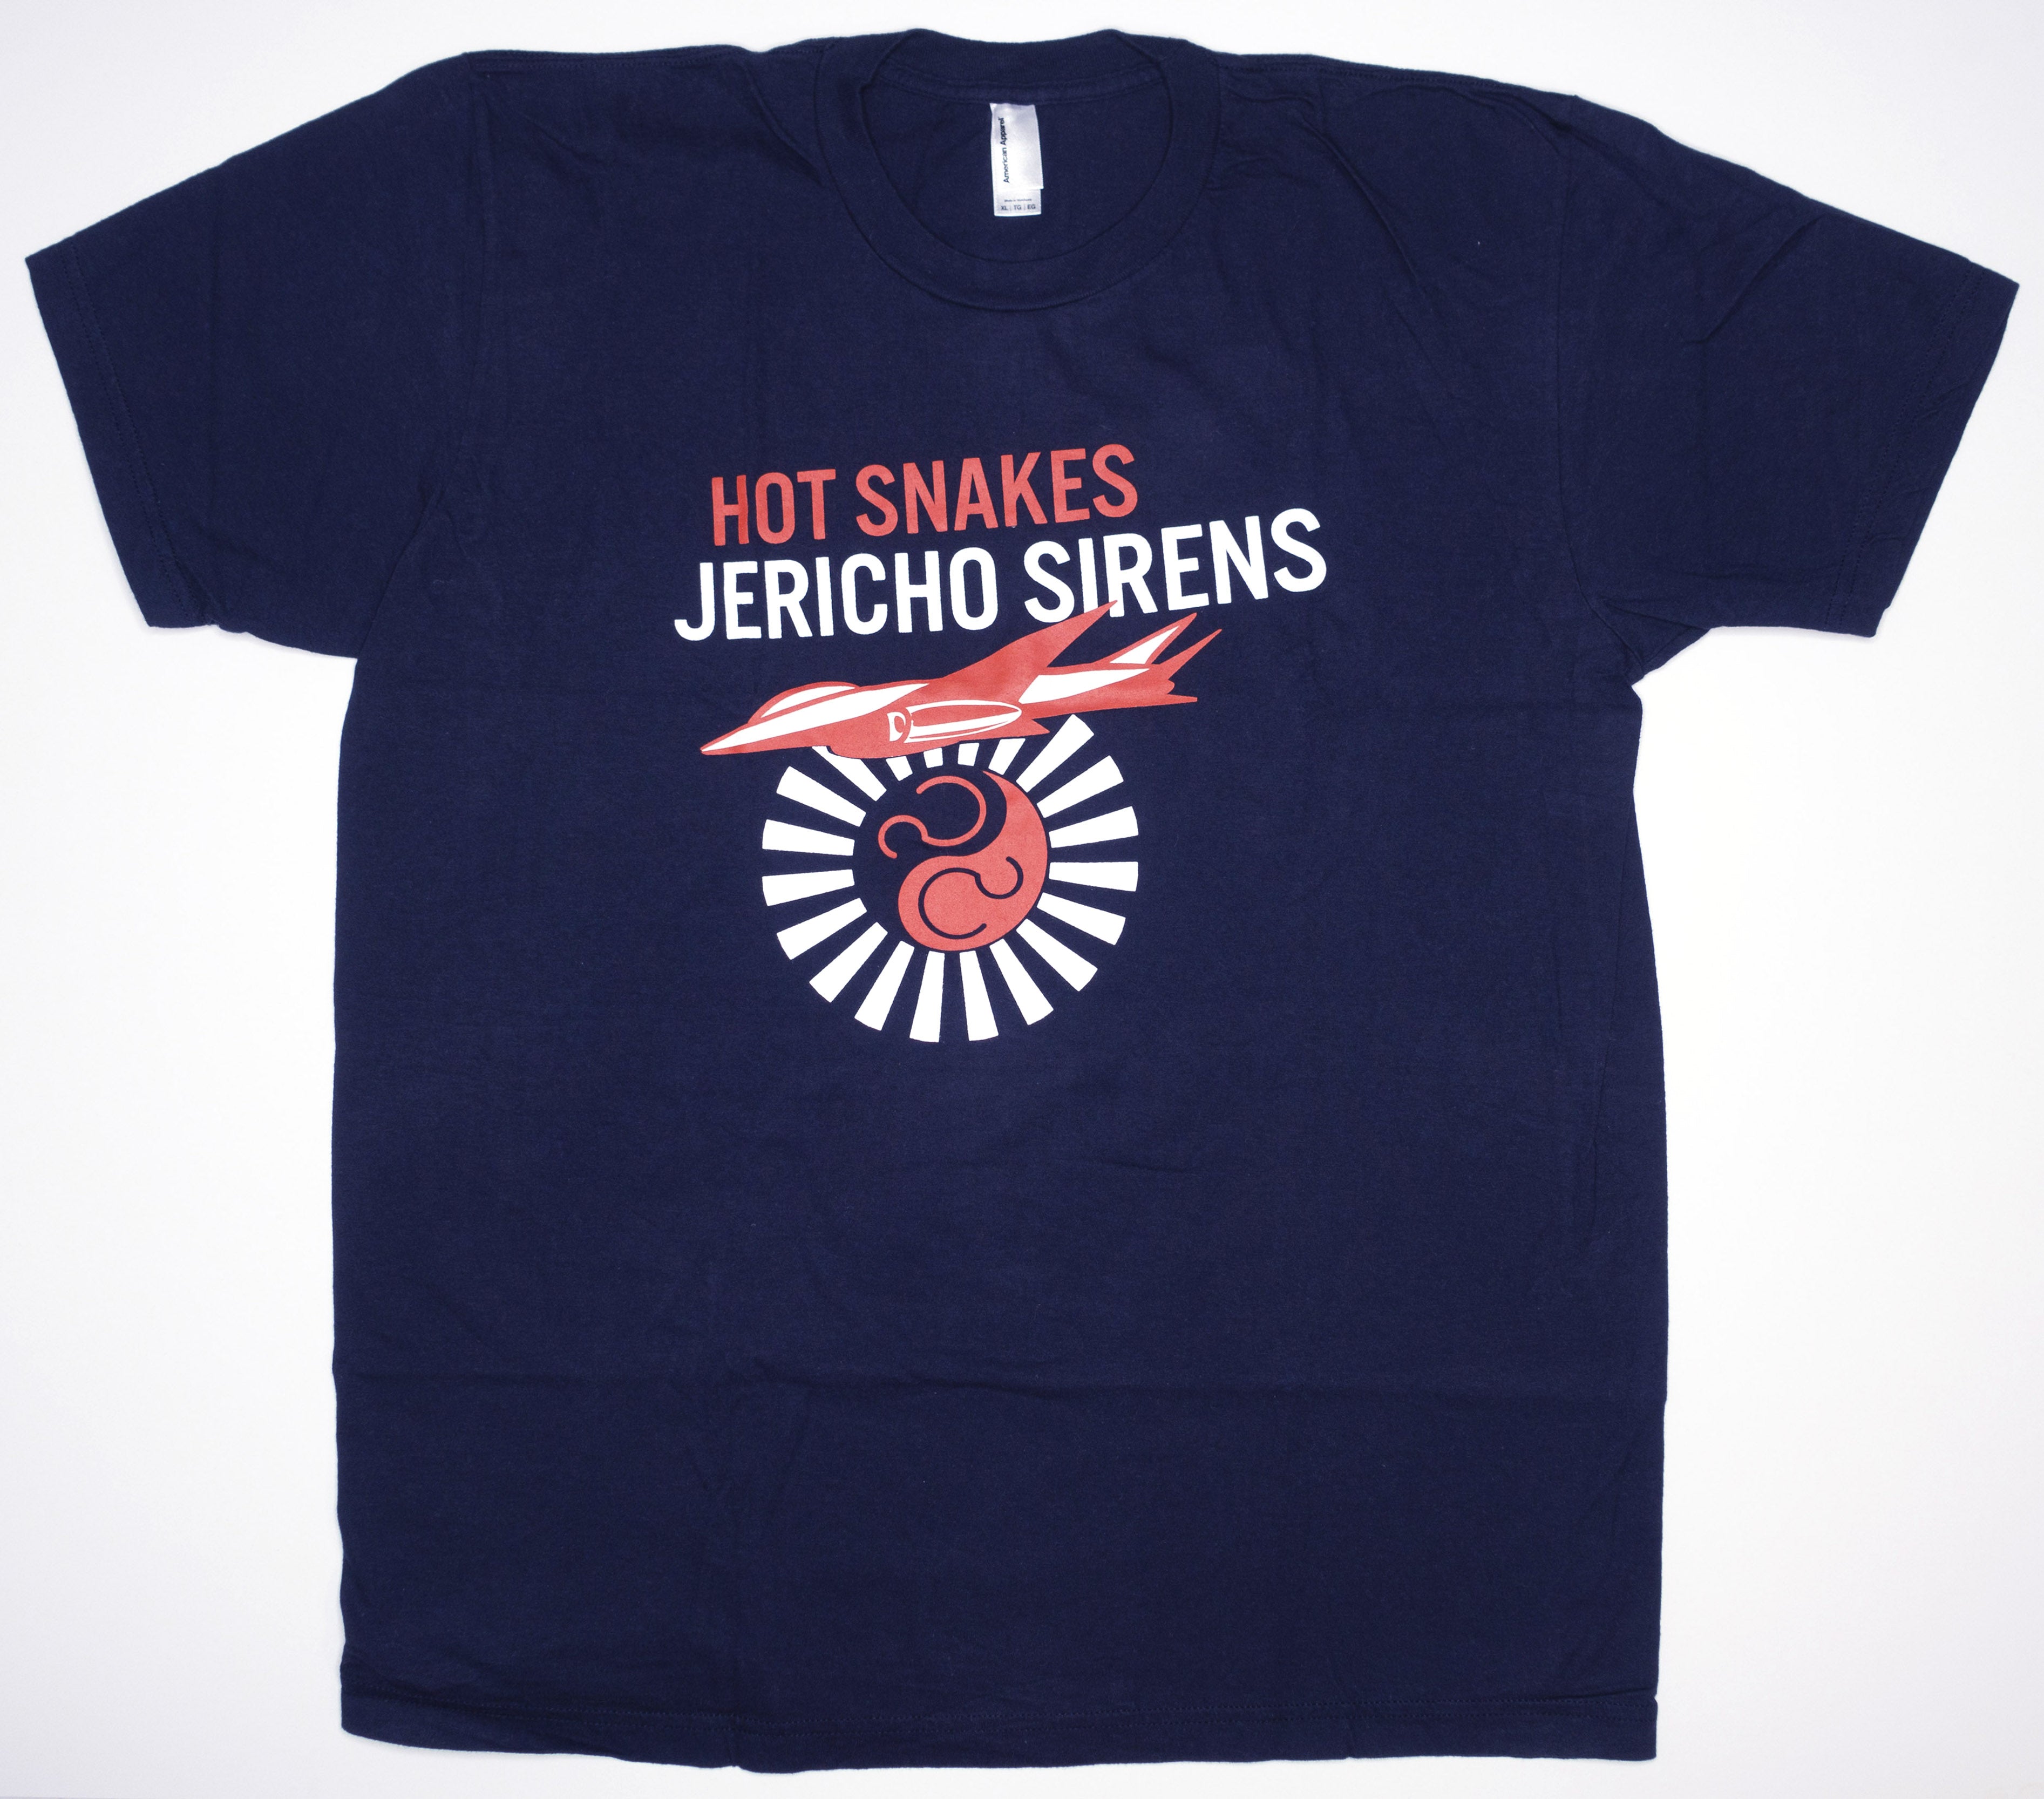 Hot Snakes - Jericho Sirens Tour Shirt Size Large